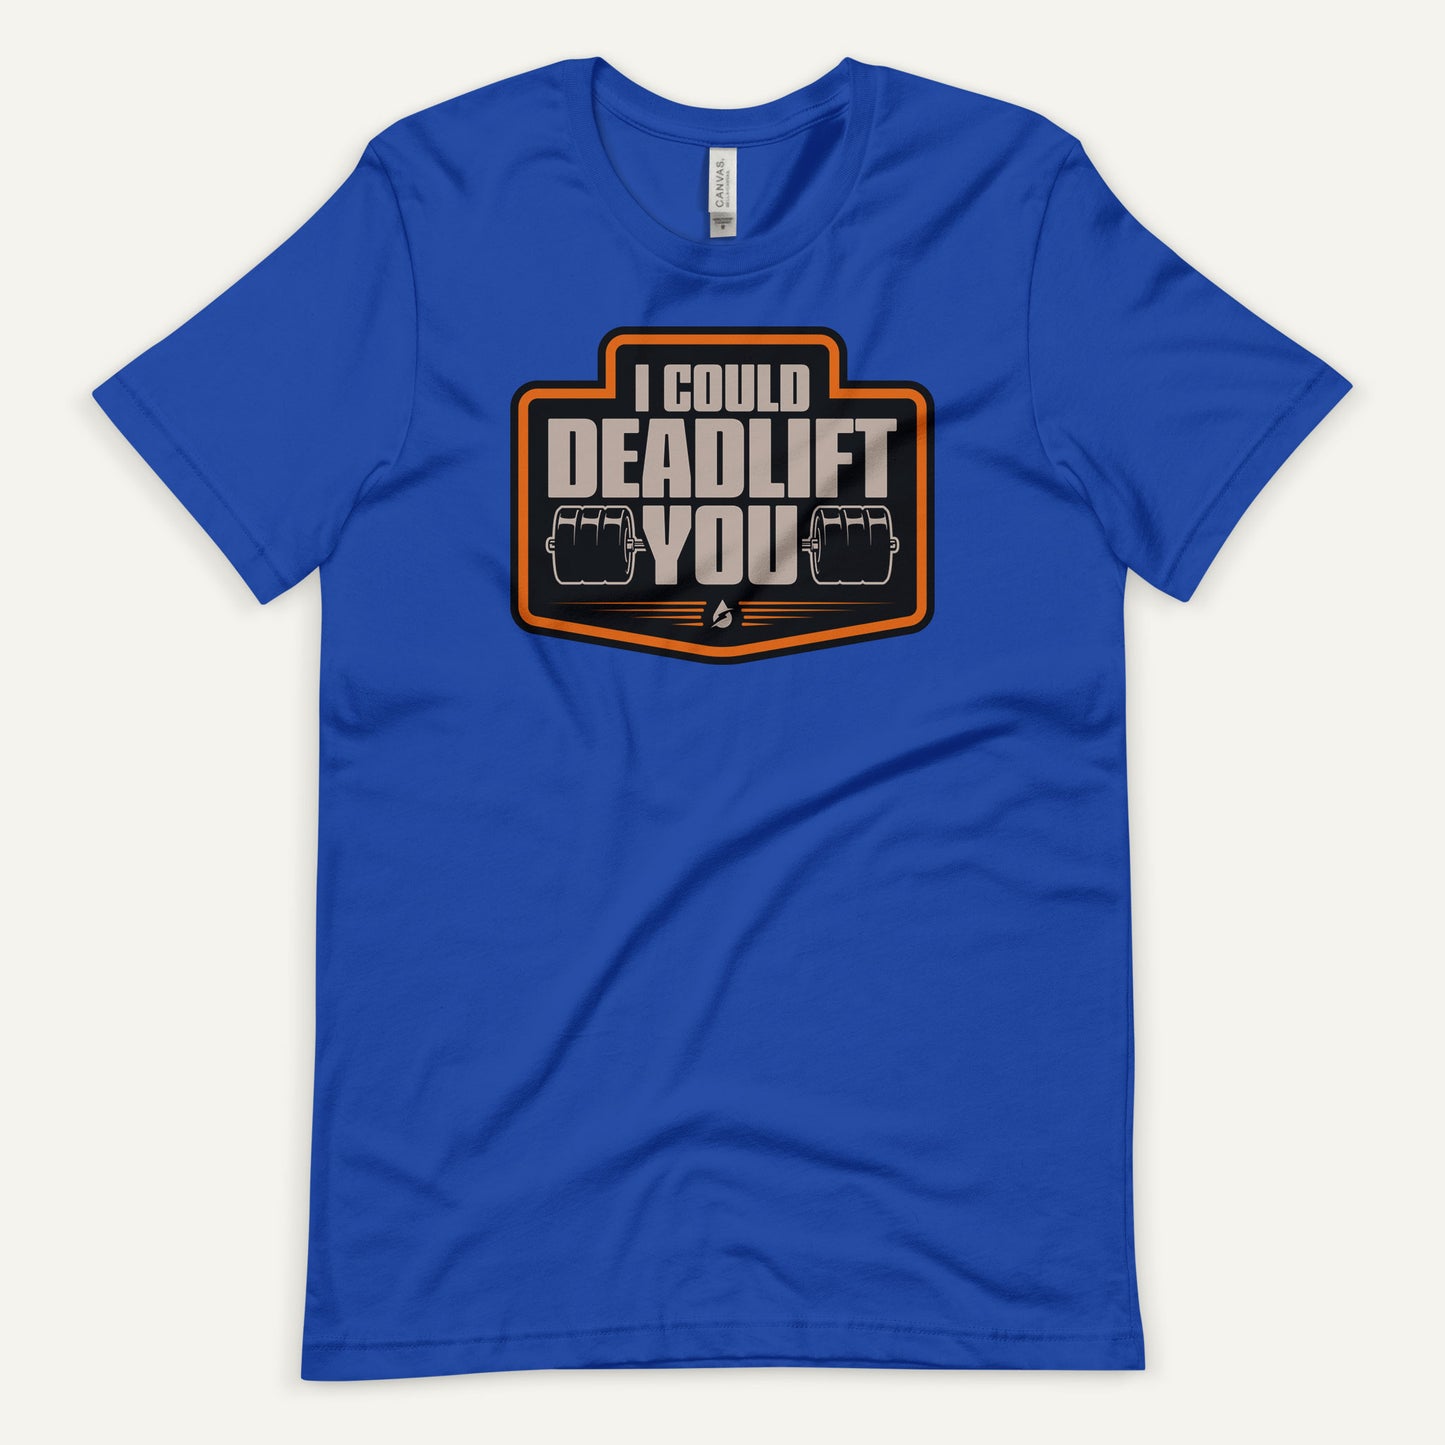 I Could Deadlift You Men's Standard T-Shirt